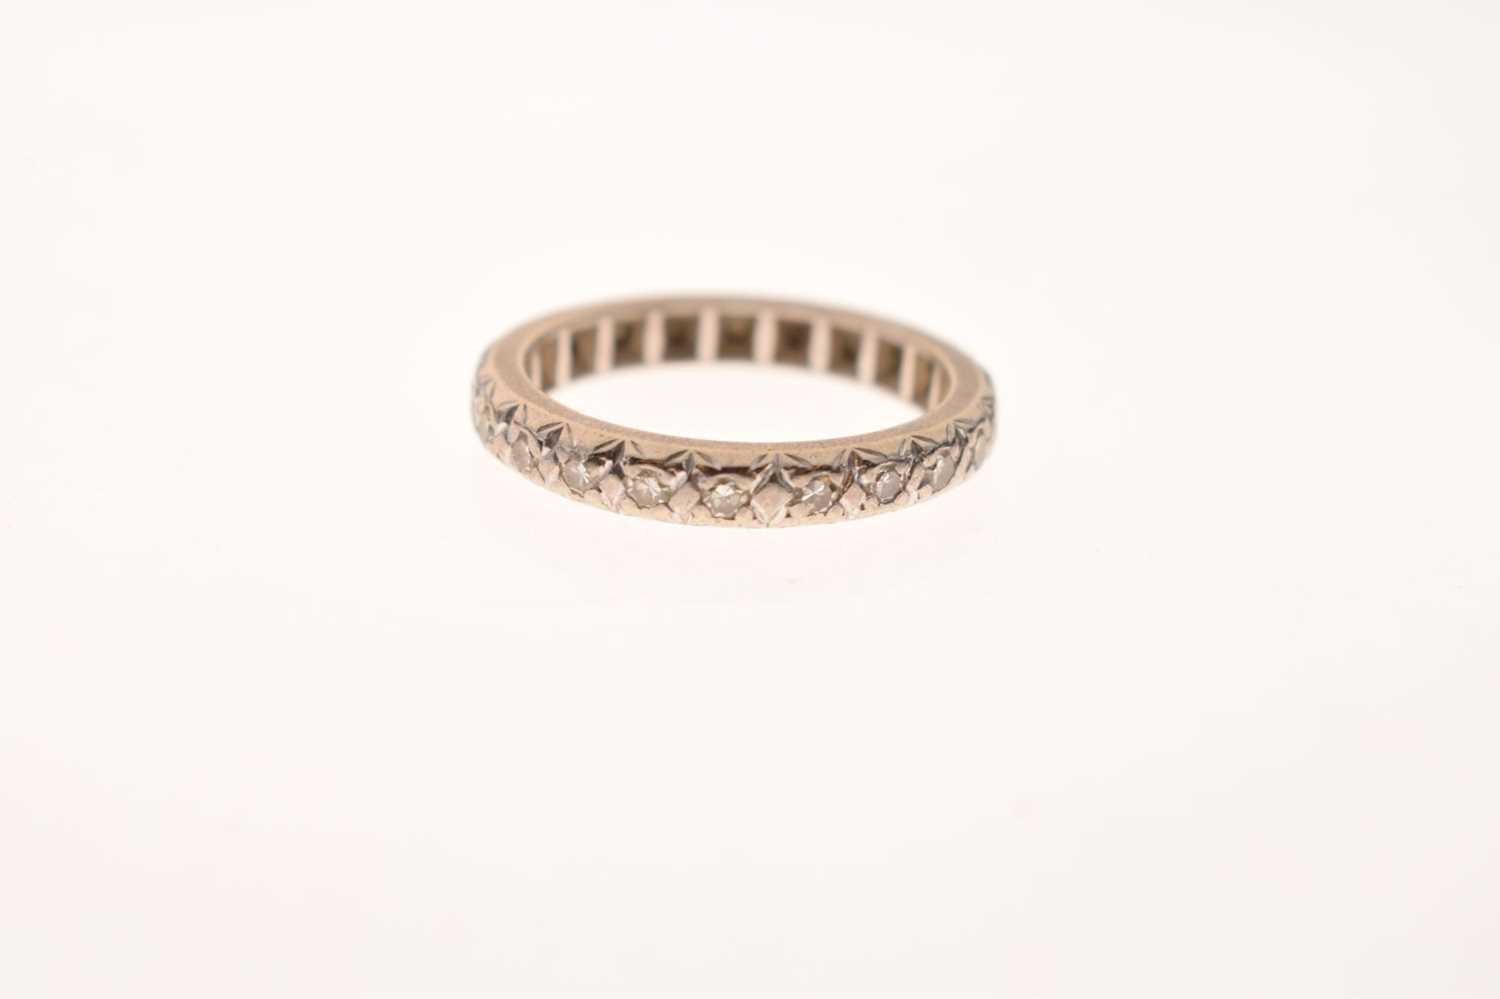 Full diamond eternity ring - Image 4 of 6